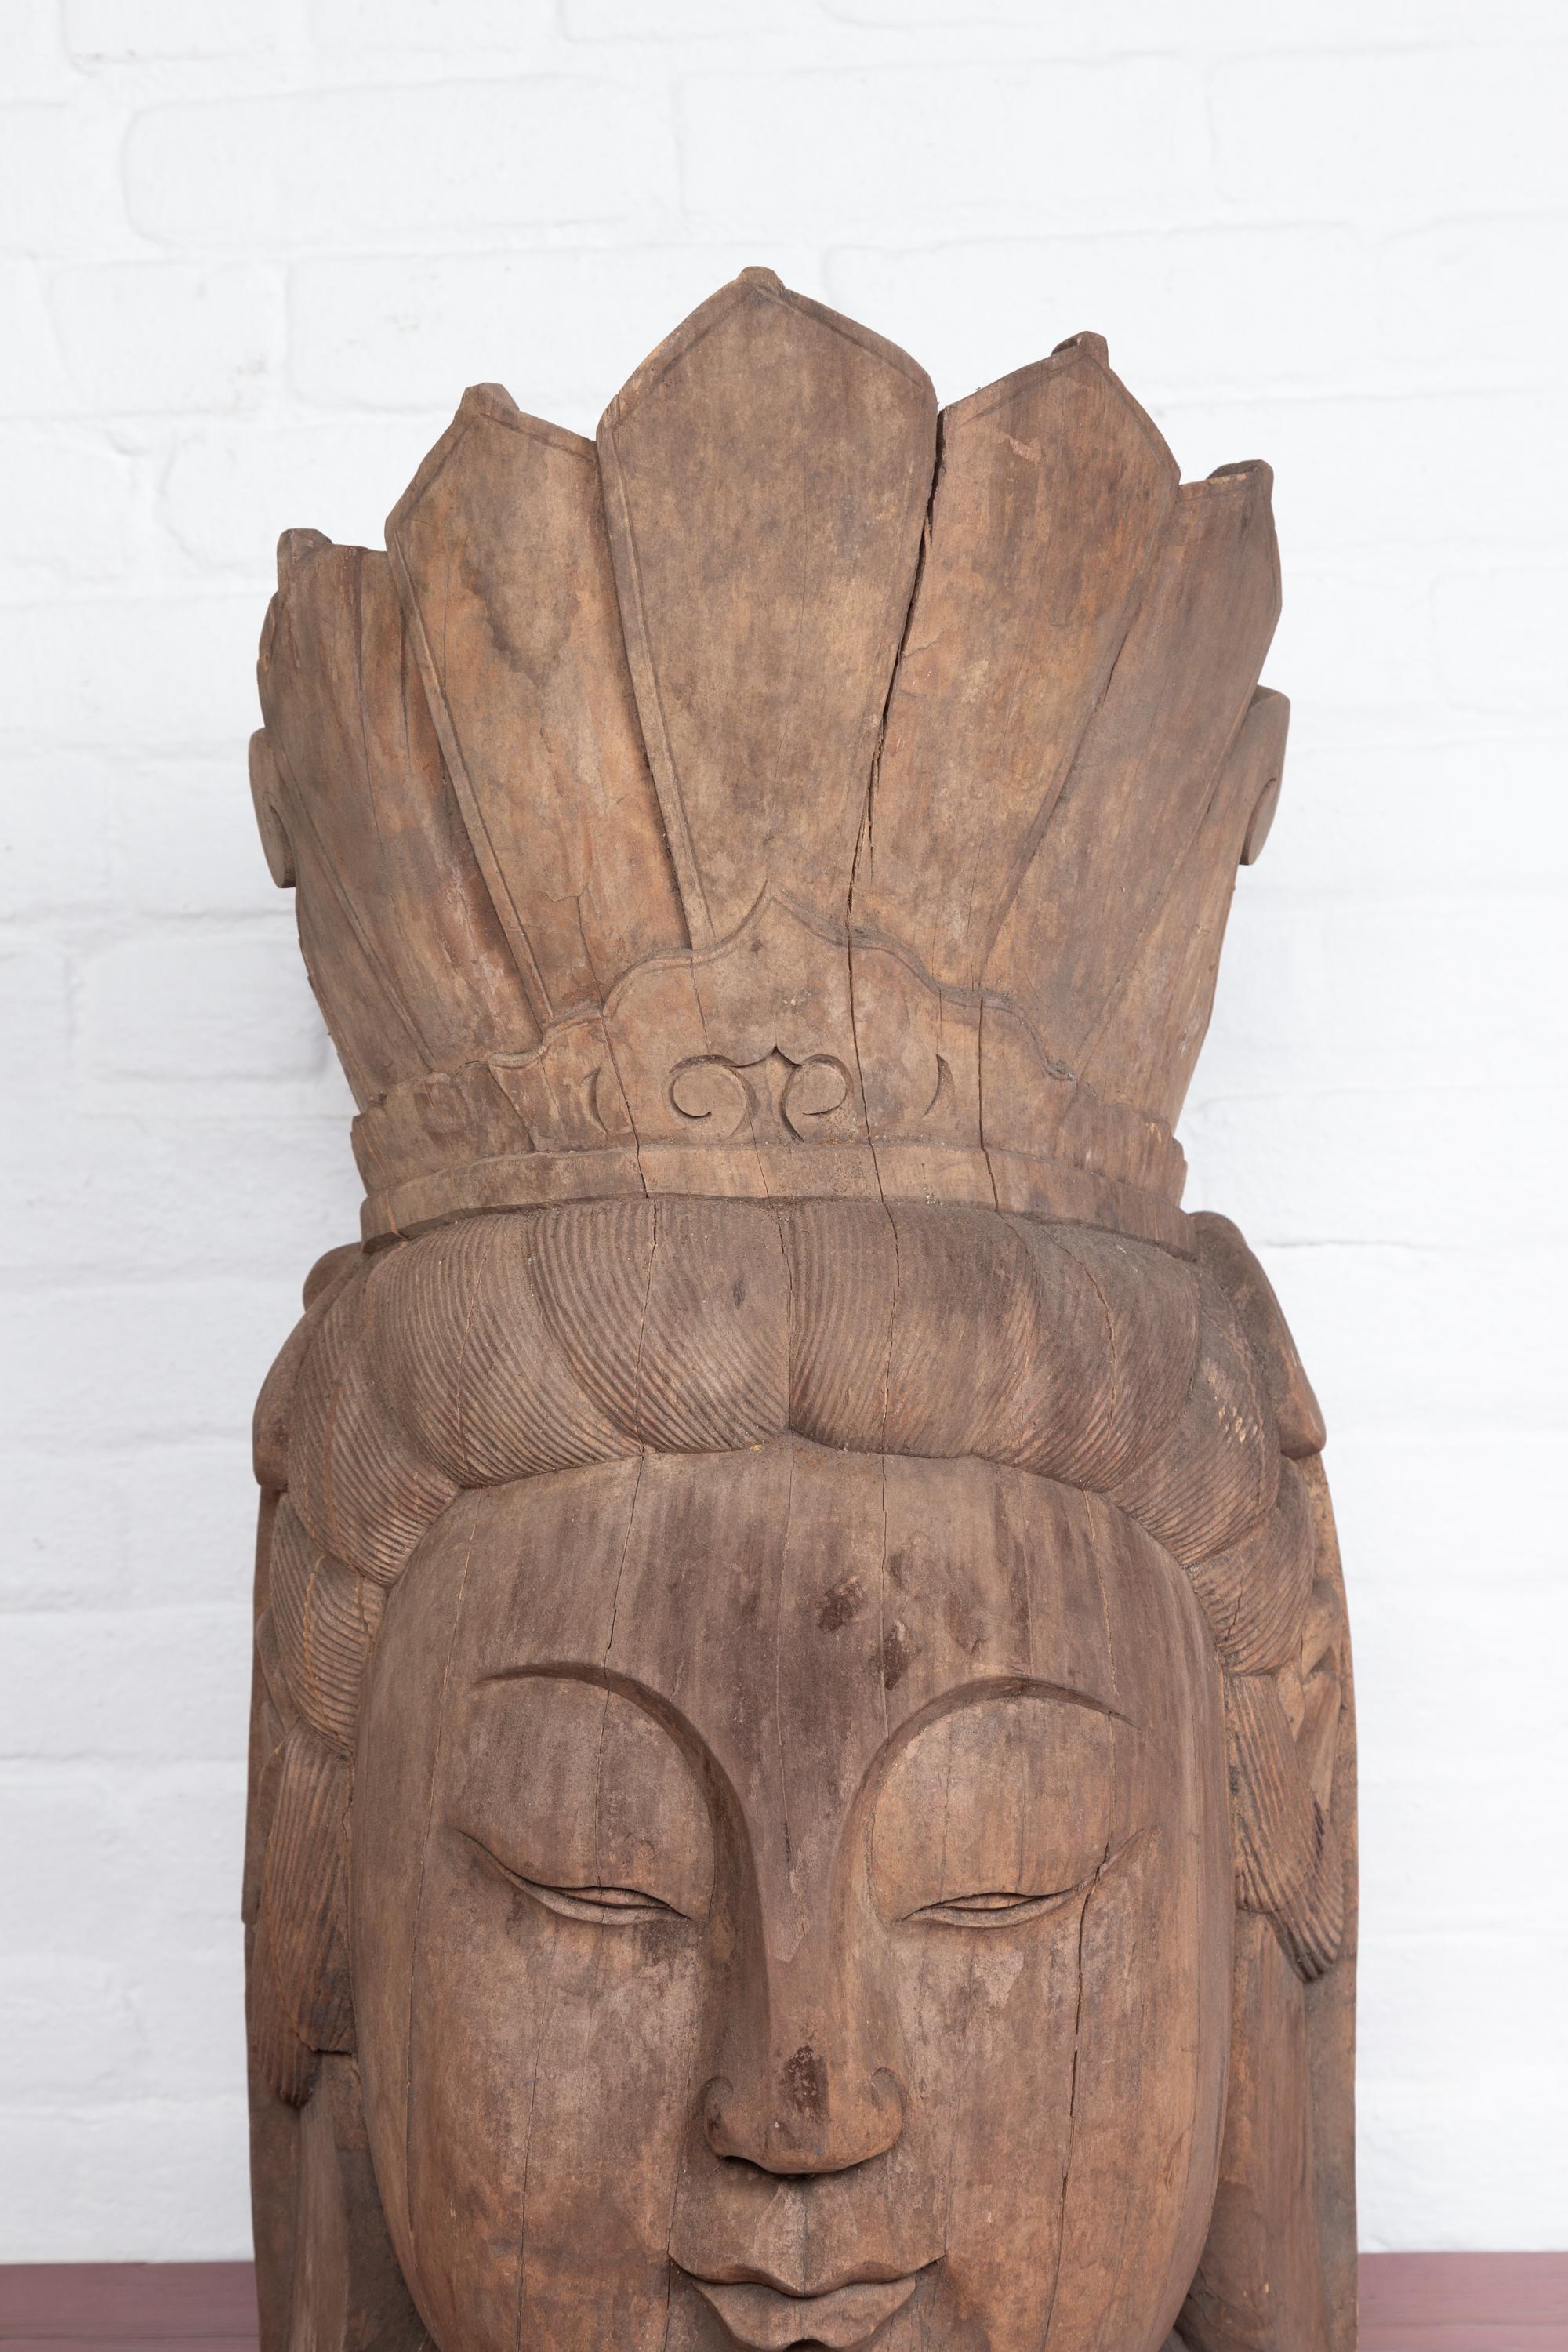 wooden head carvings